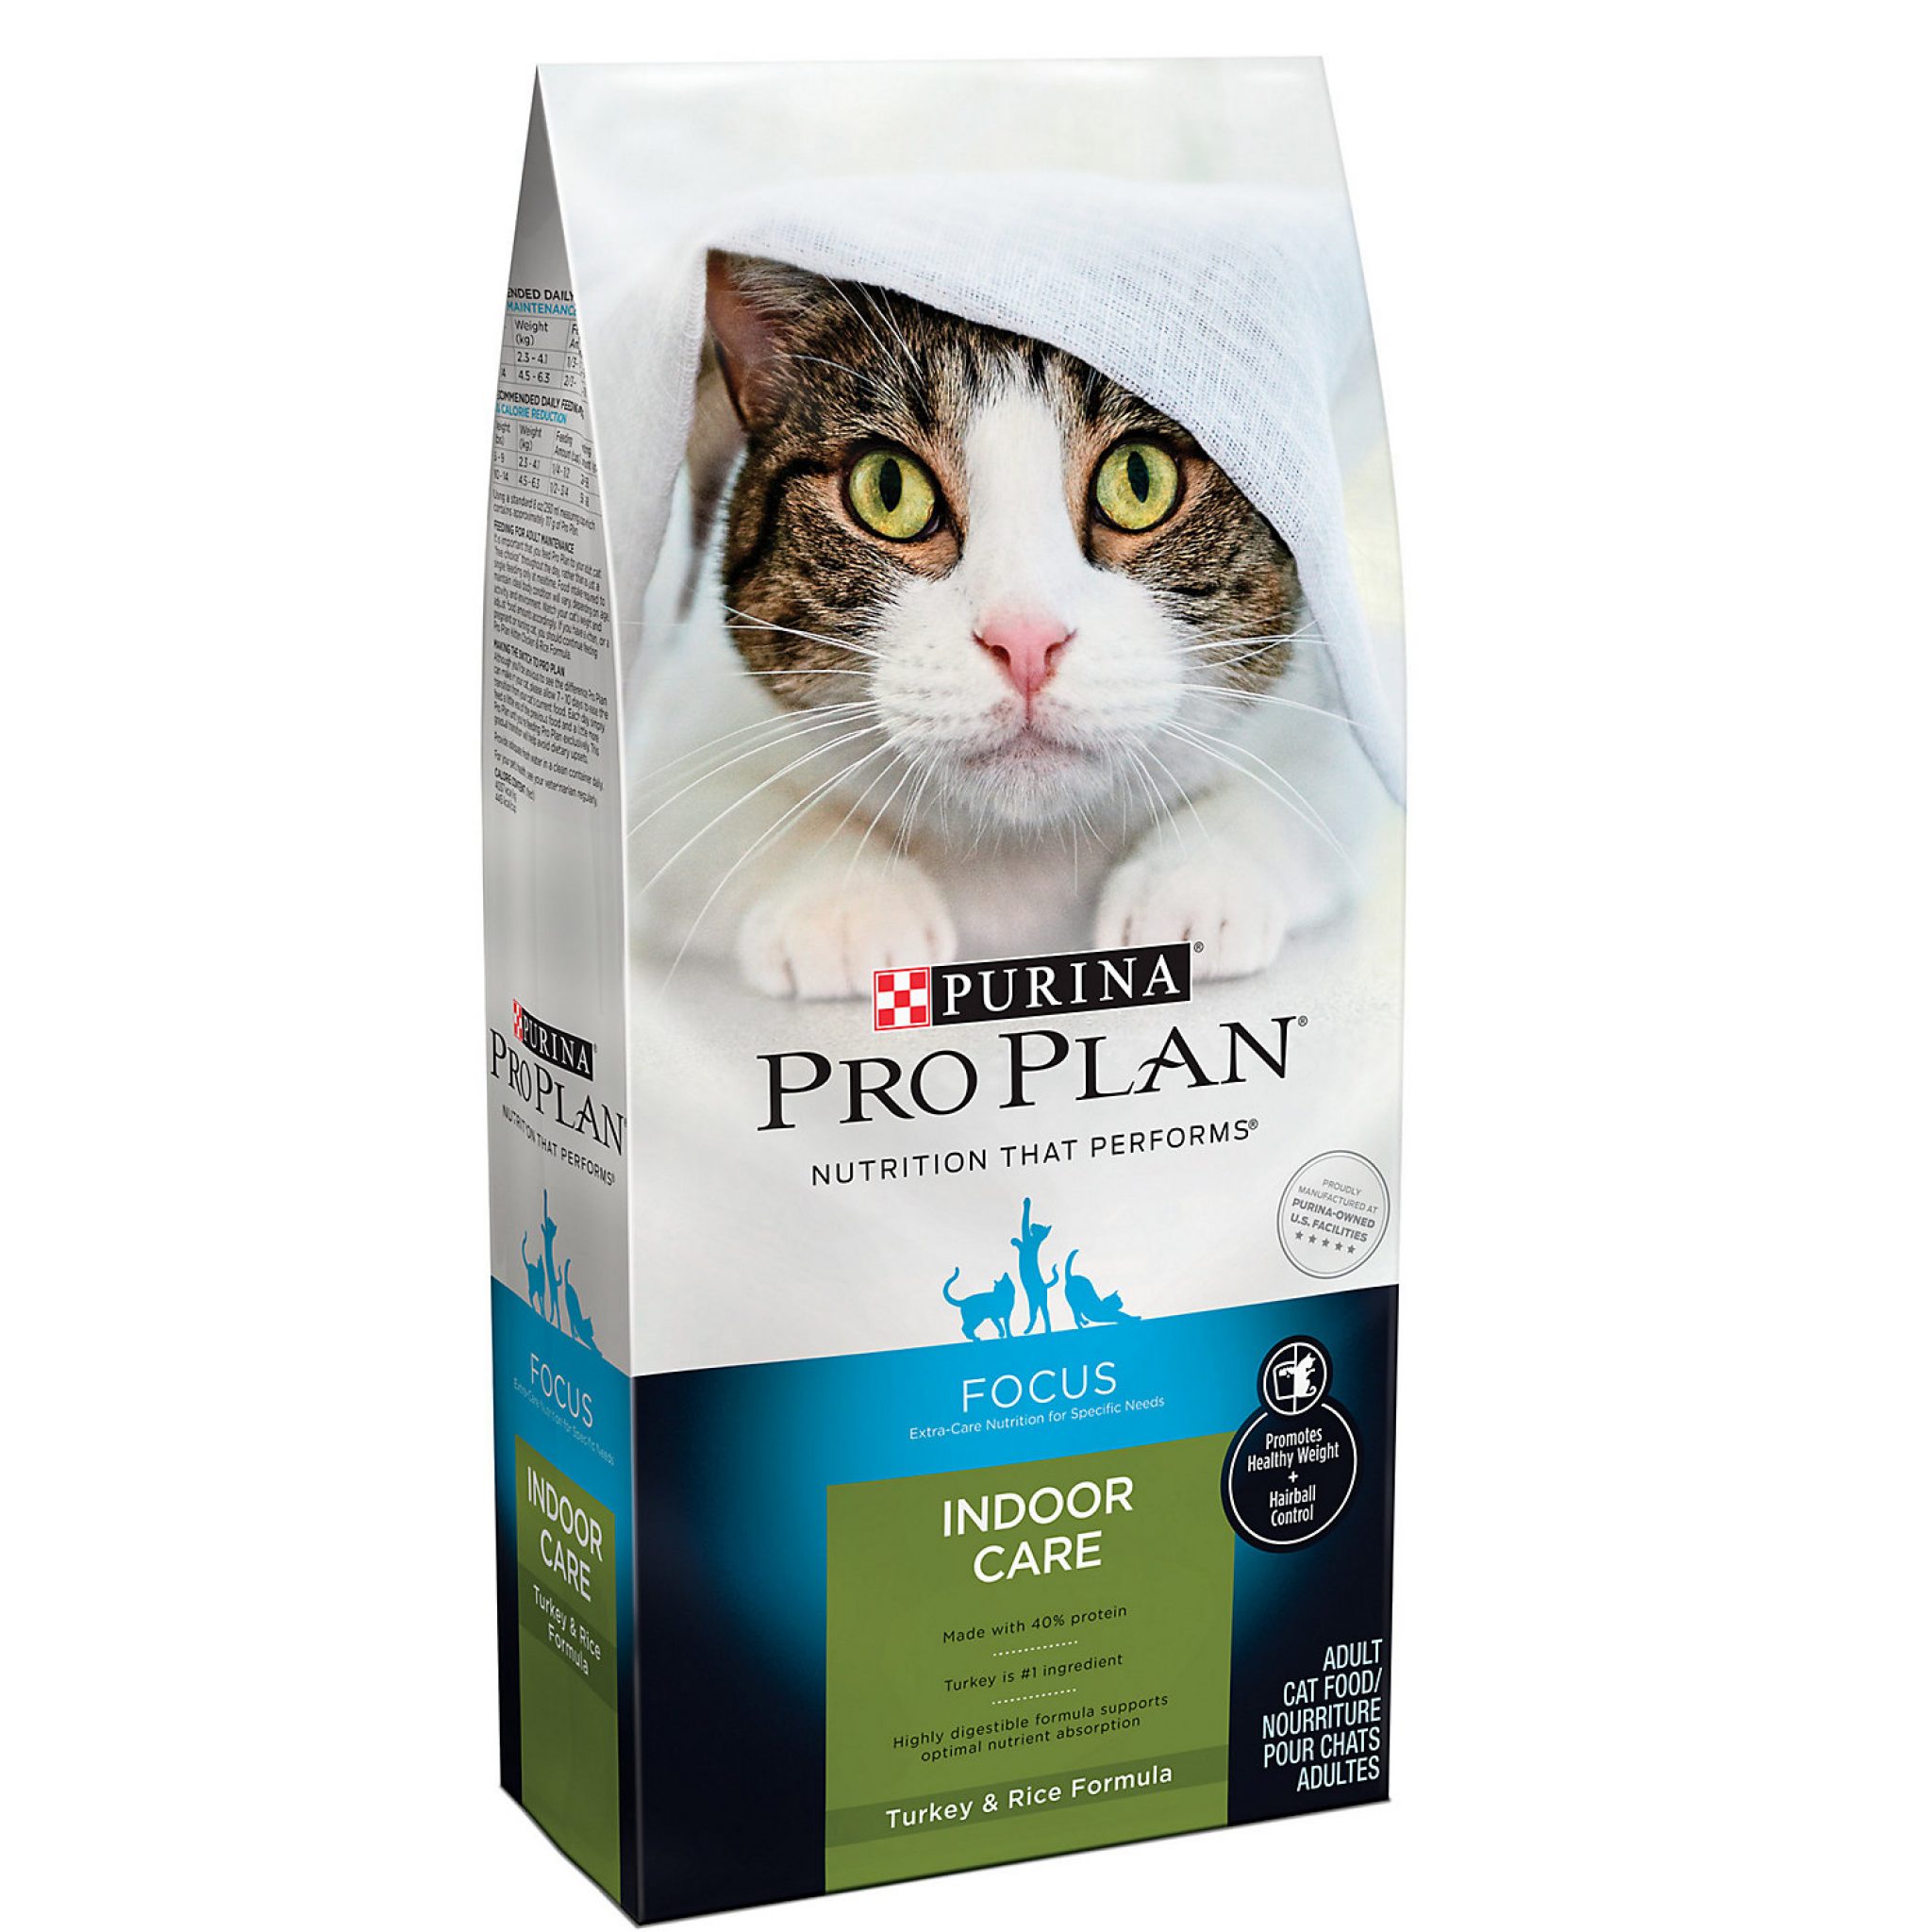 Purina Pro Plan Focus Indoor Care Turkey & Rice Formula Adult Dry Cat